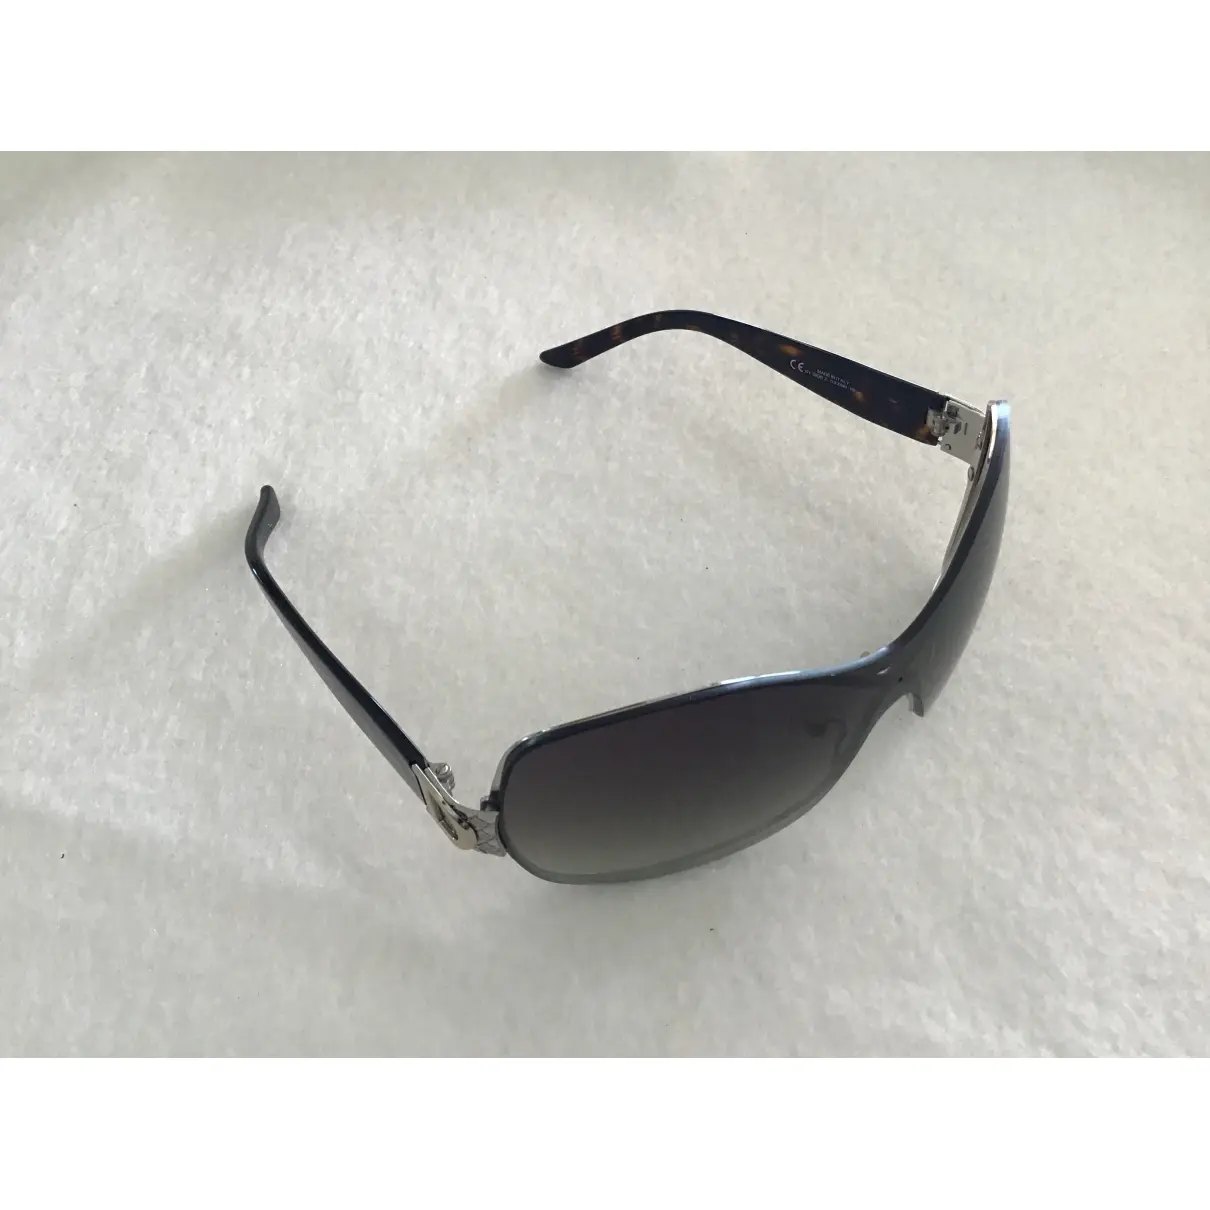 Buy Dior Diorbydior2 oversized sunglasses online